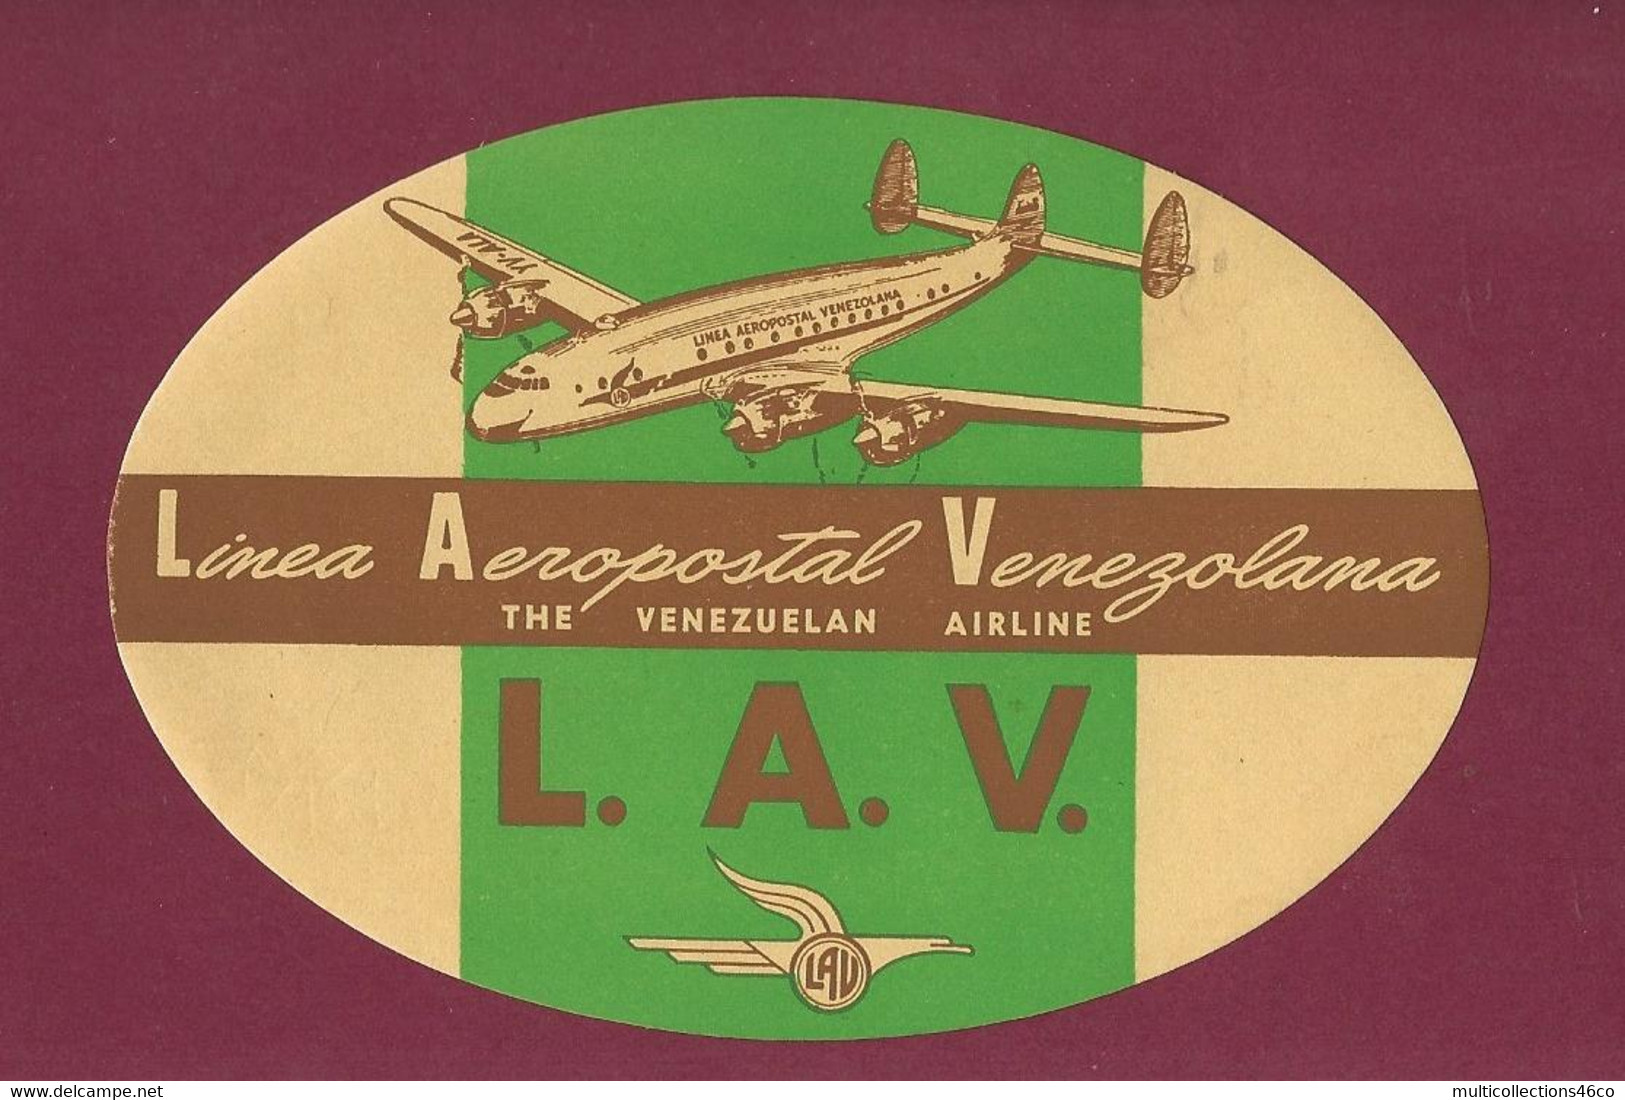 060922 - AVIATION ETIQUETTE A BAGAGE LAV Linea Aeropostal Venezolana THE VENEZUELAN AIRLINE Avion - Baggage Etiketten